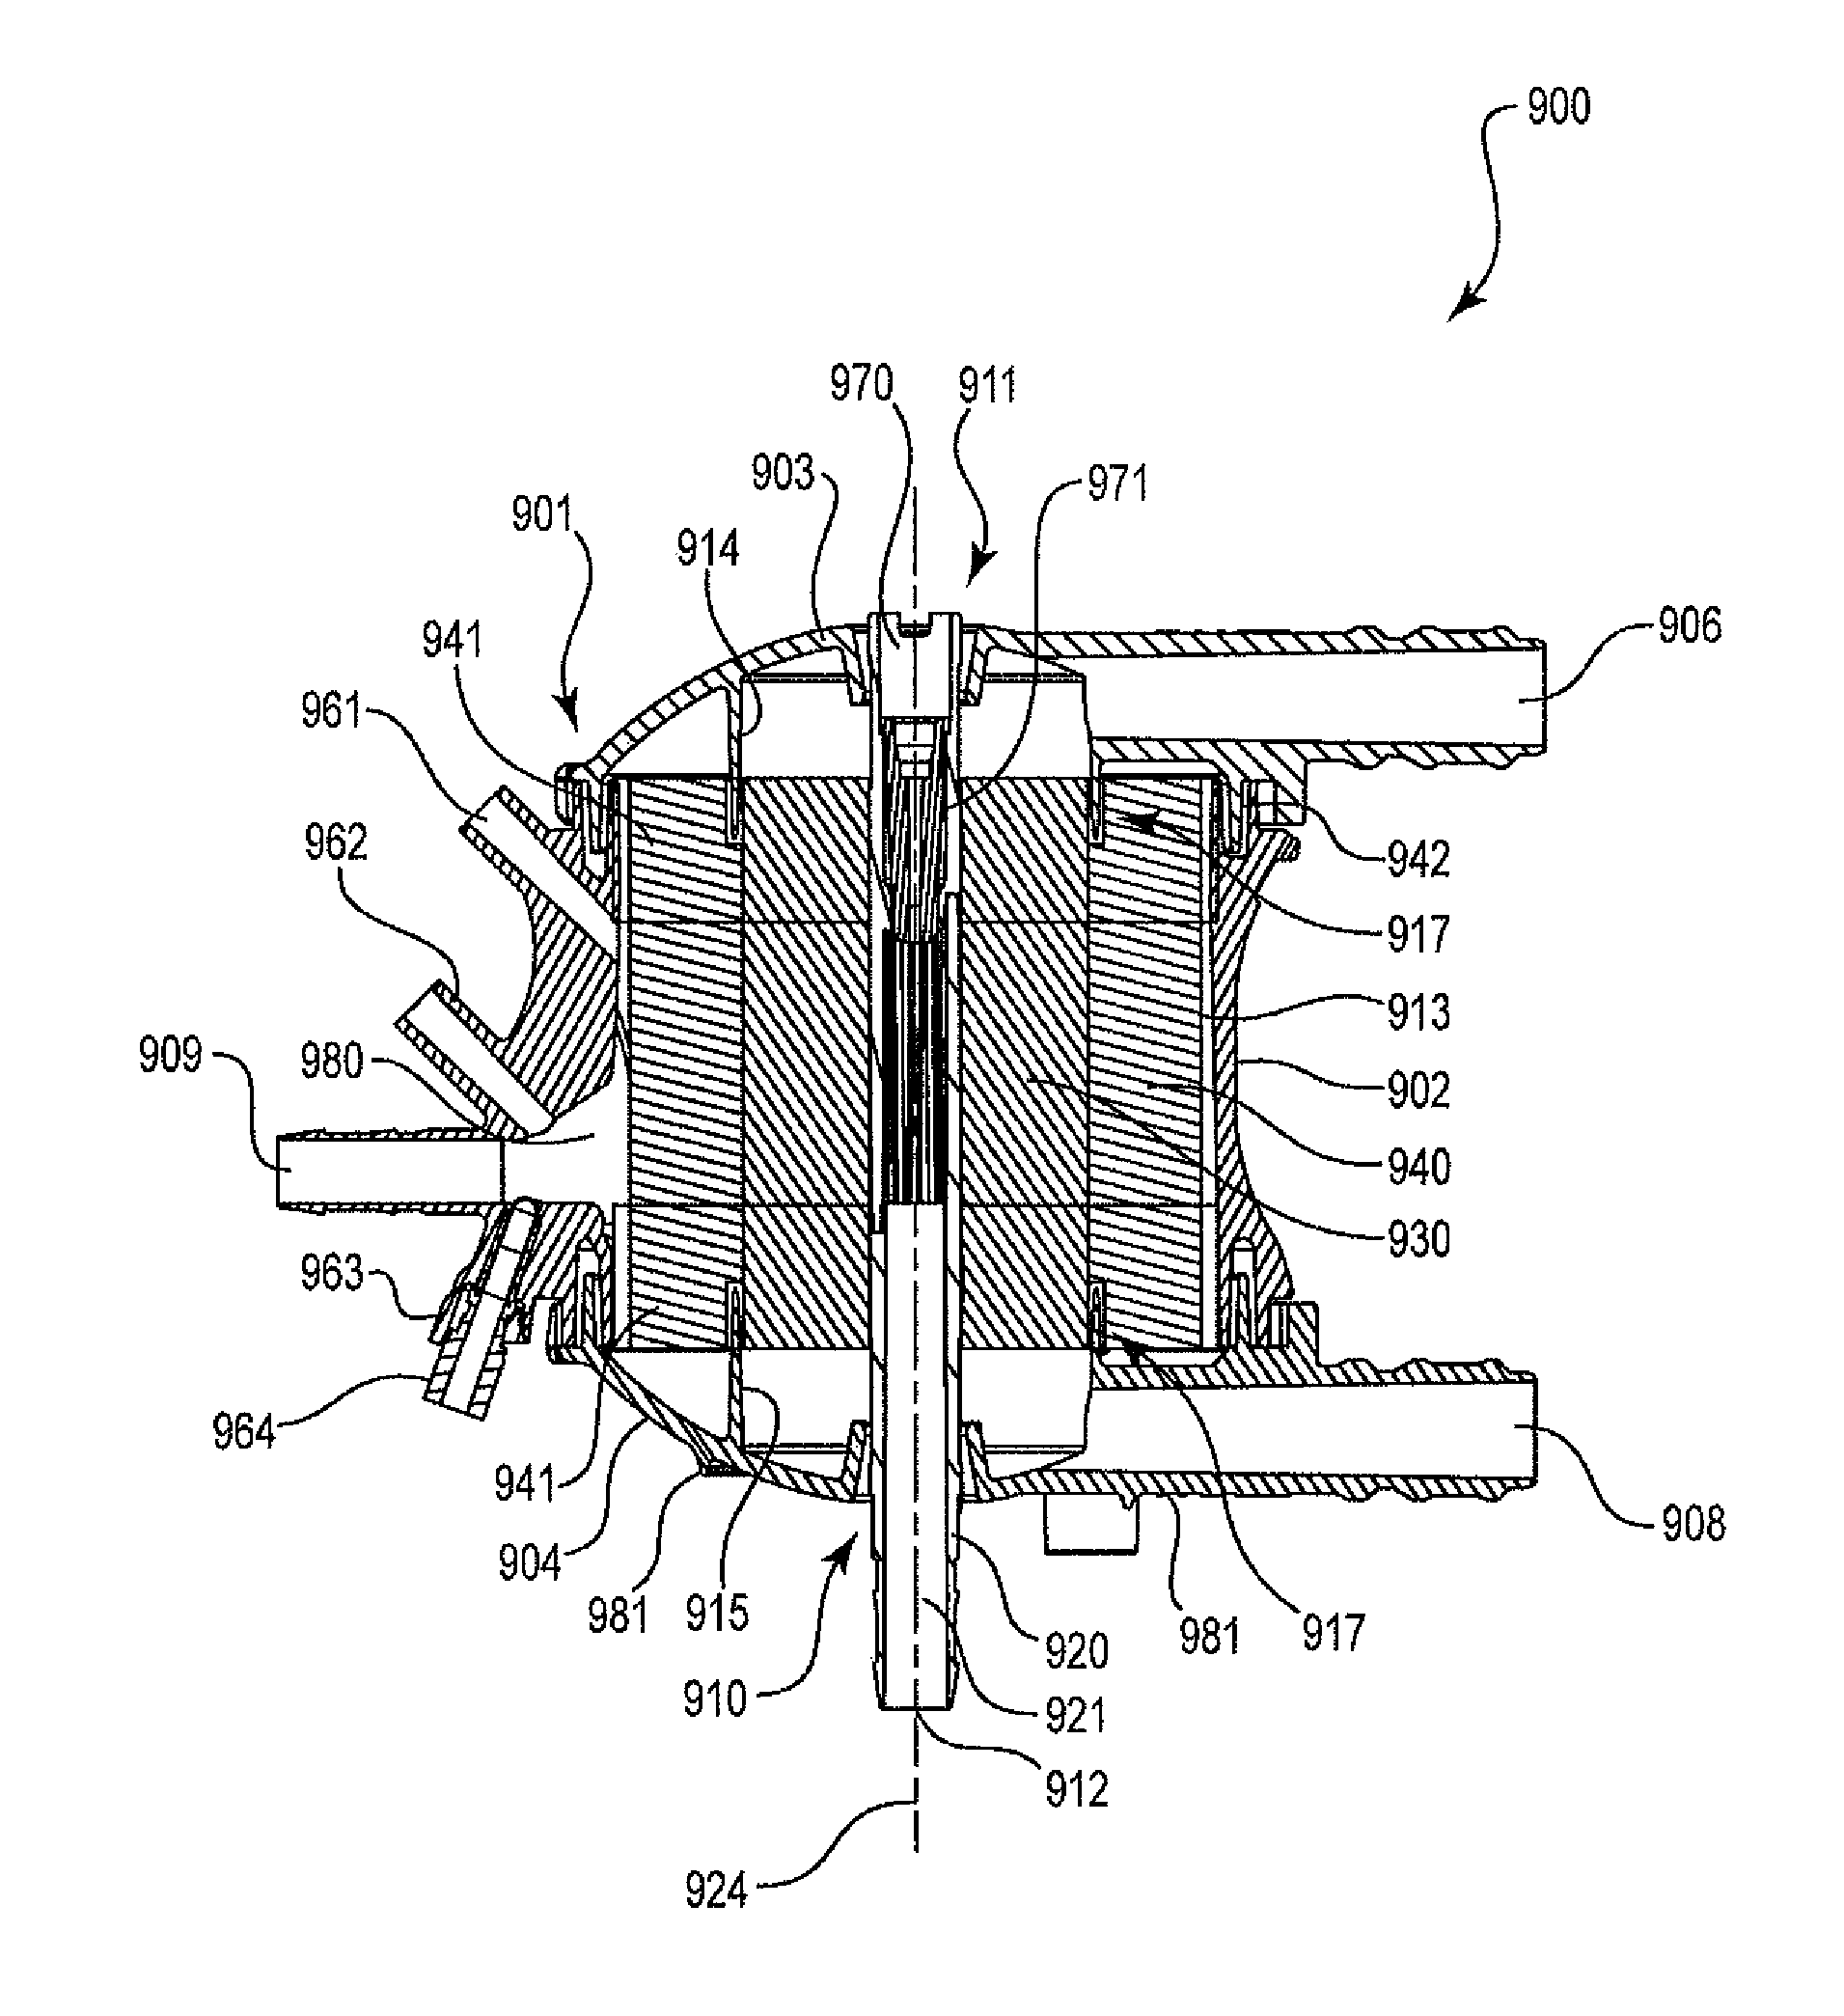 Radial design oxygenator with heat exchanger